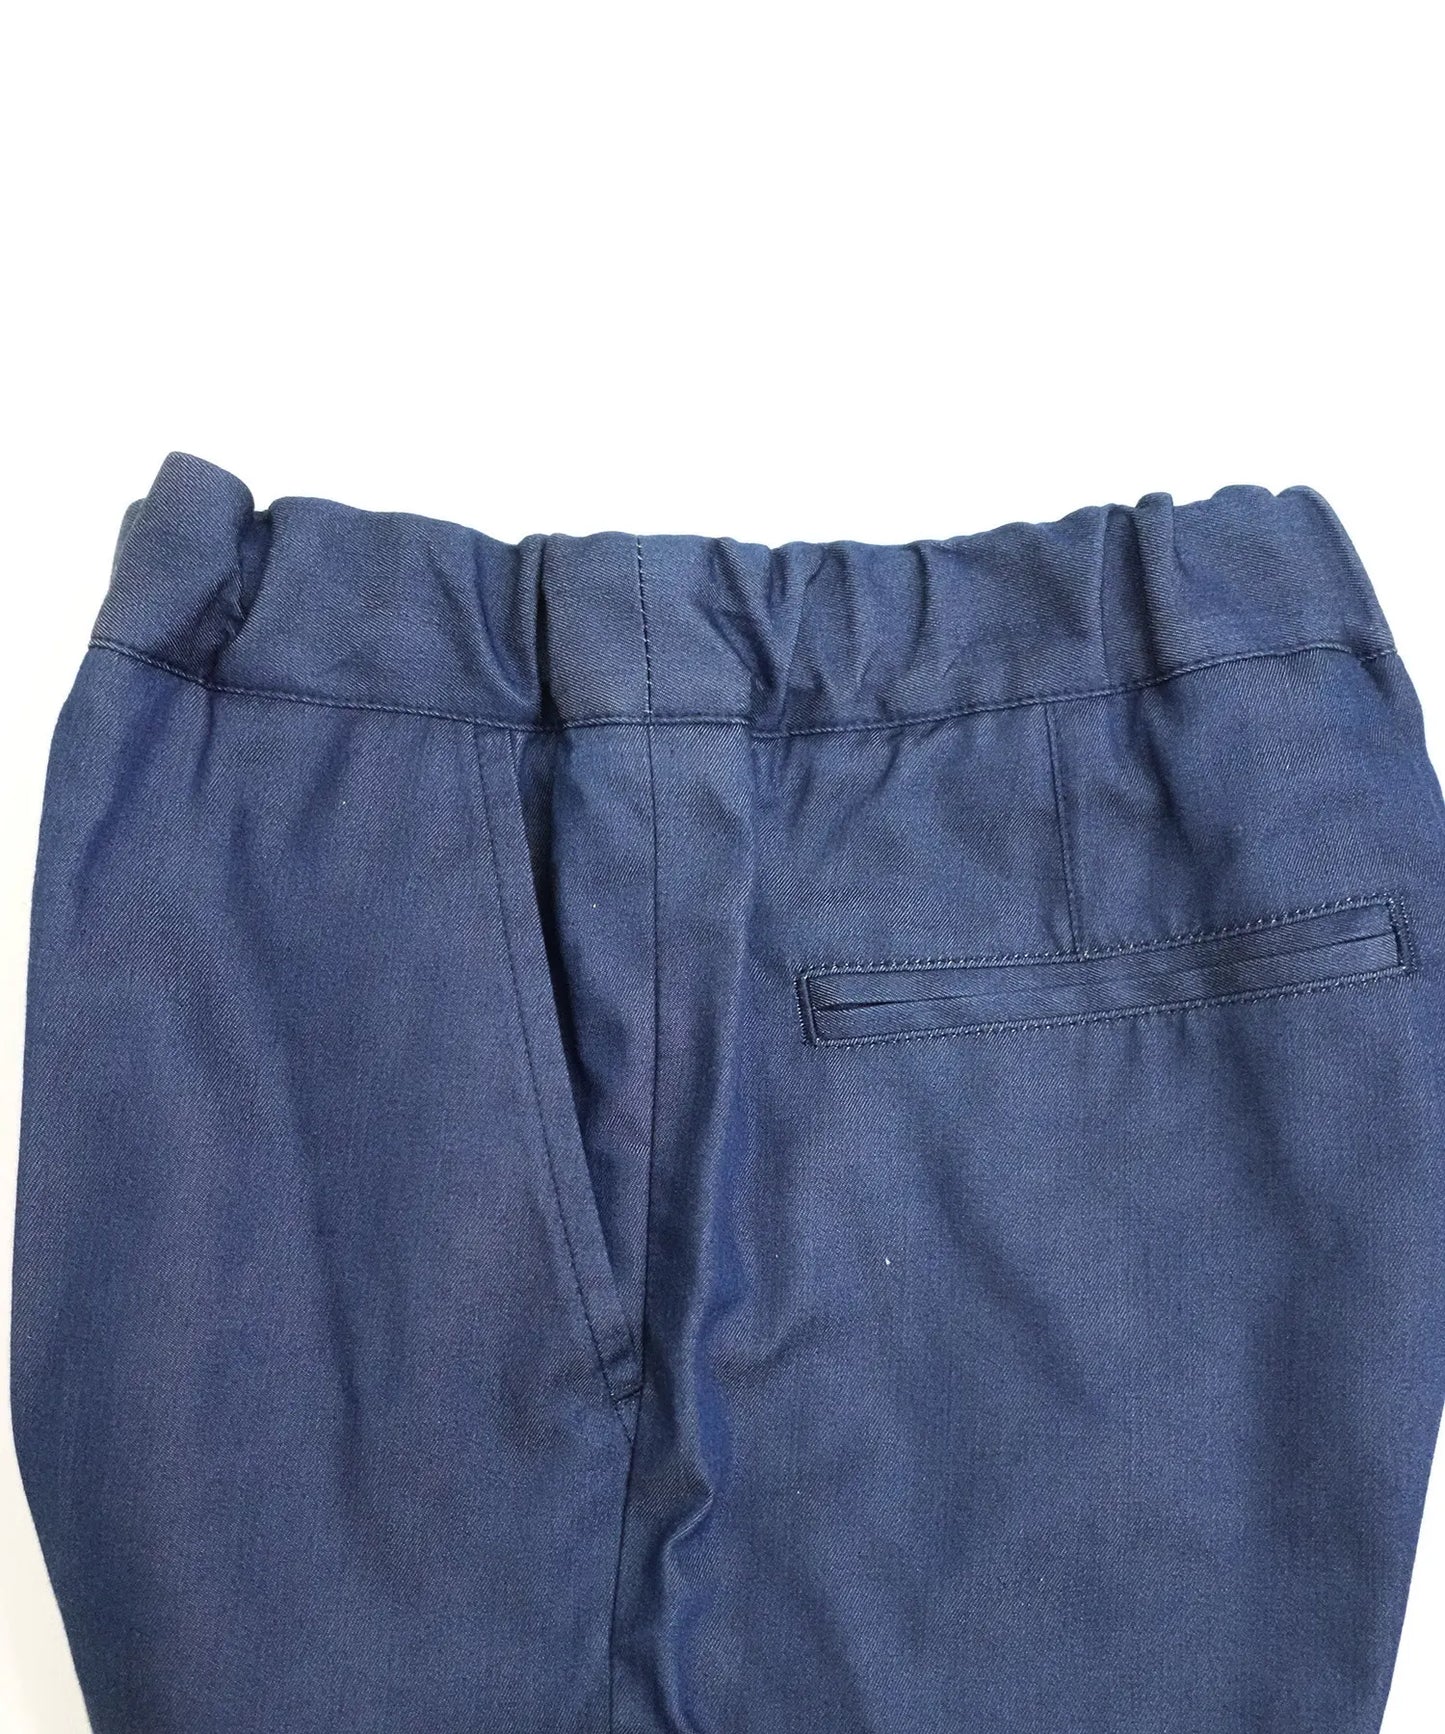 INDIGO BASIC PANTS 薄牛仔布套裝相容 [145-165cm]